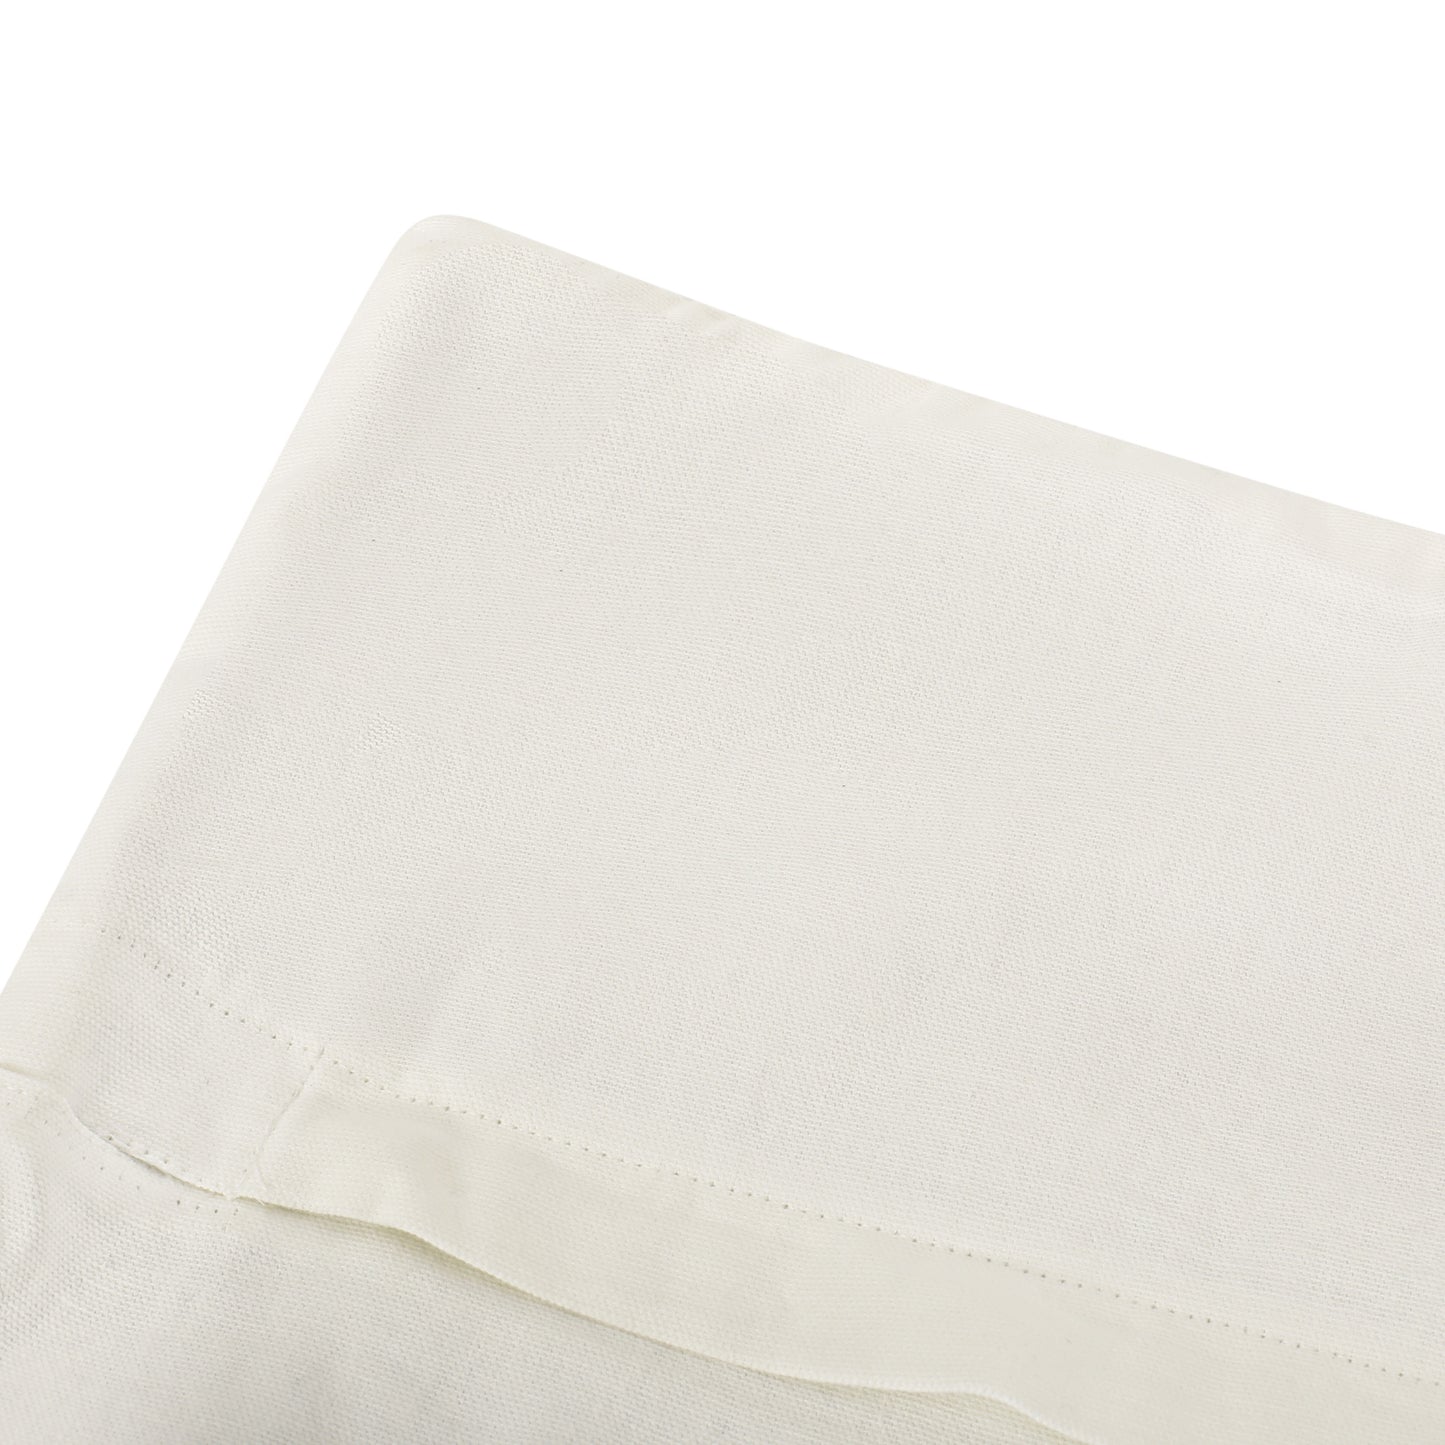 Ellana Hand-Loomed Boho Pillow Cover